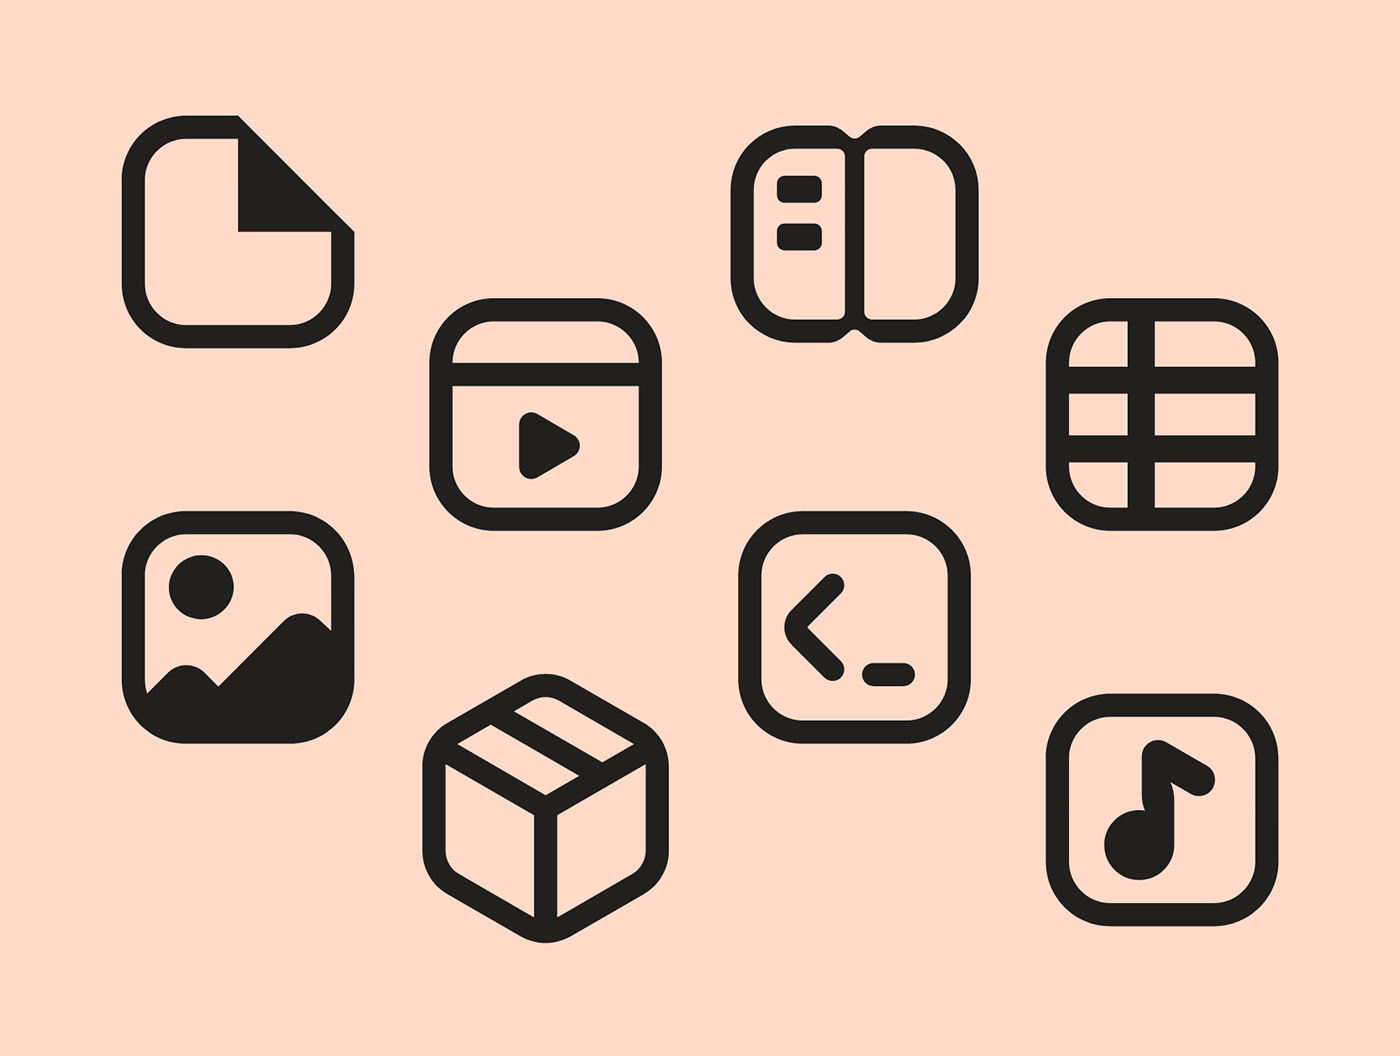 file types Files icons pictograms minimal icon set attachments NOZBE symbols